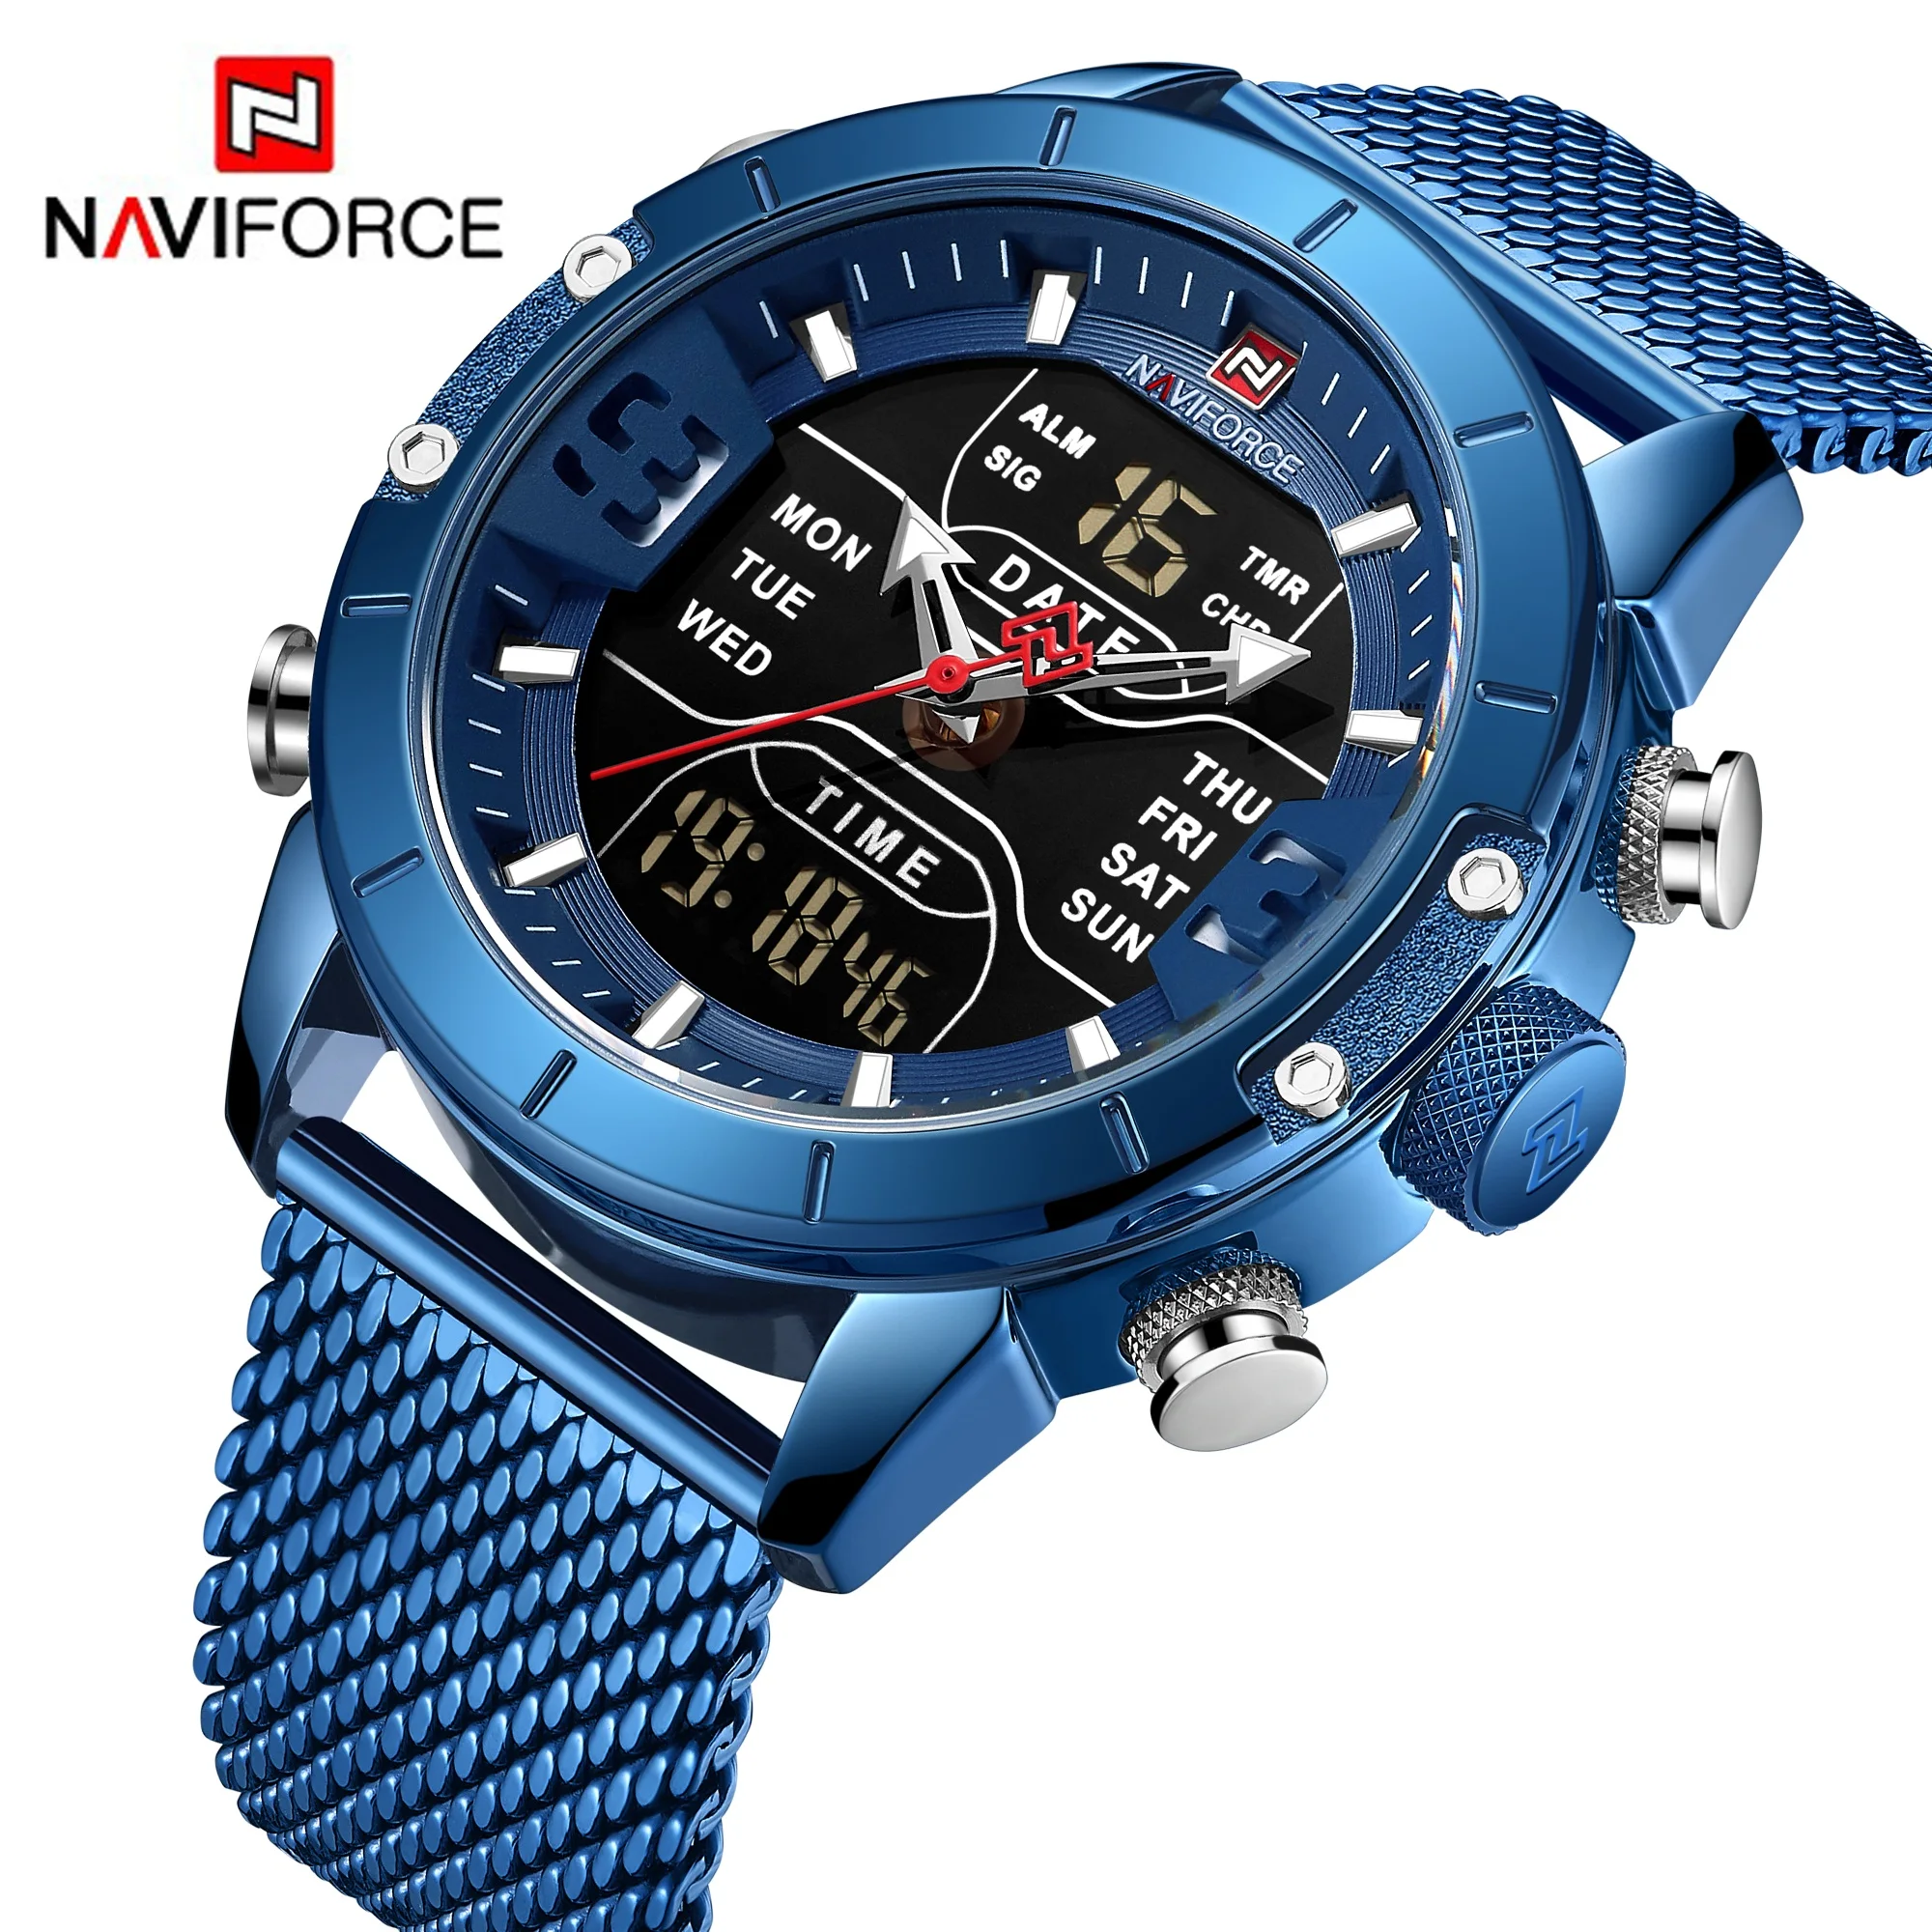 

naviforce watch 9153 relogio masculino top luxury Wristwatches relojes hombre men digital watches navy force factory